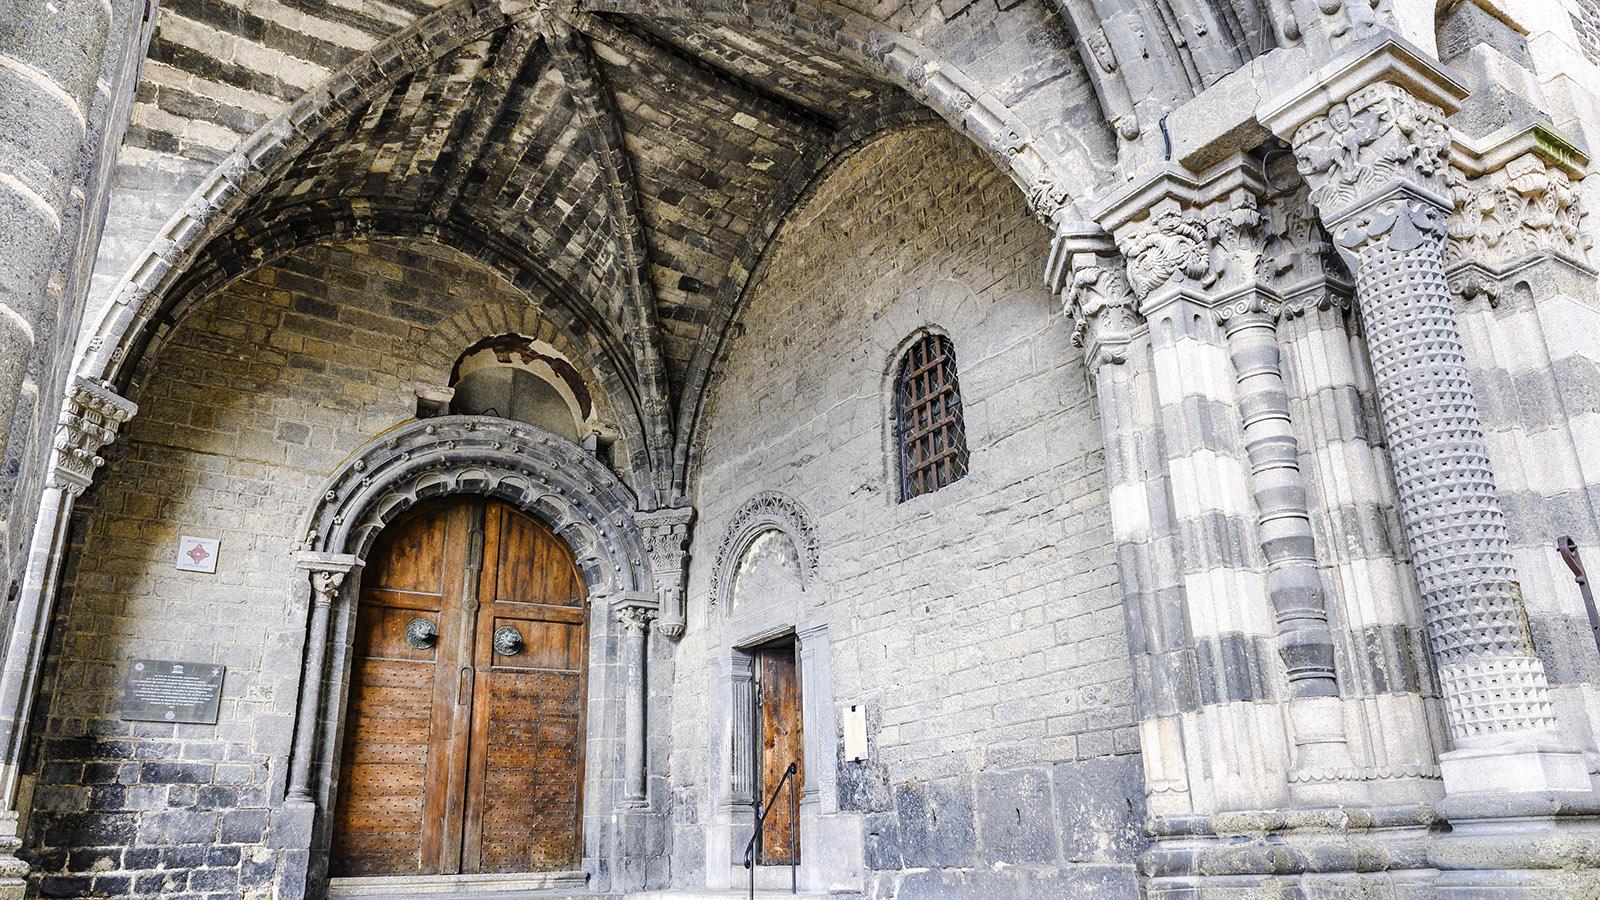 Seiteneingang der Kathedrale von Le Puy-en-Velay. Foto: Hilkr Maunder